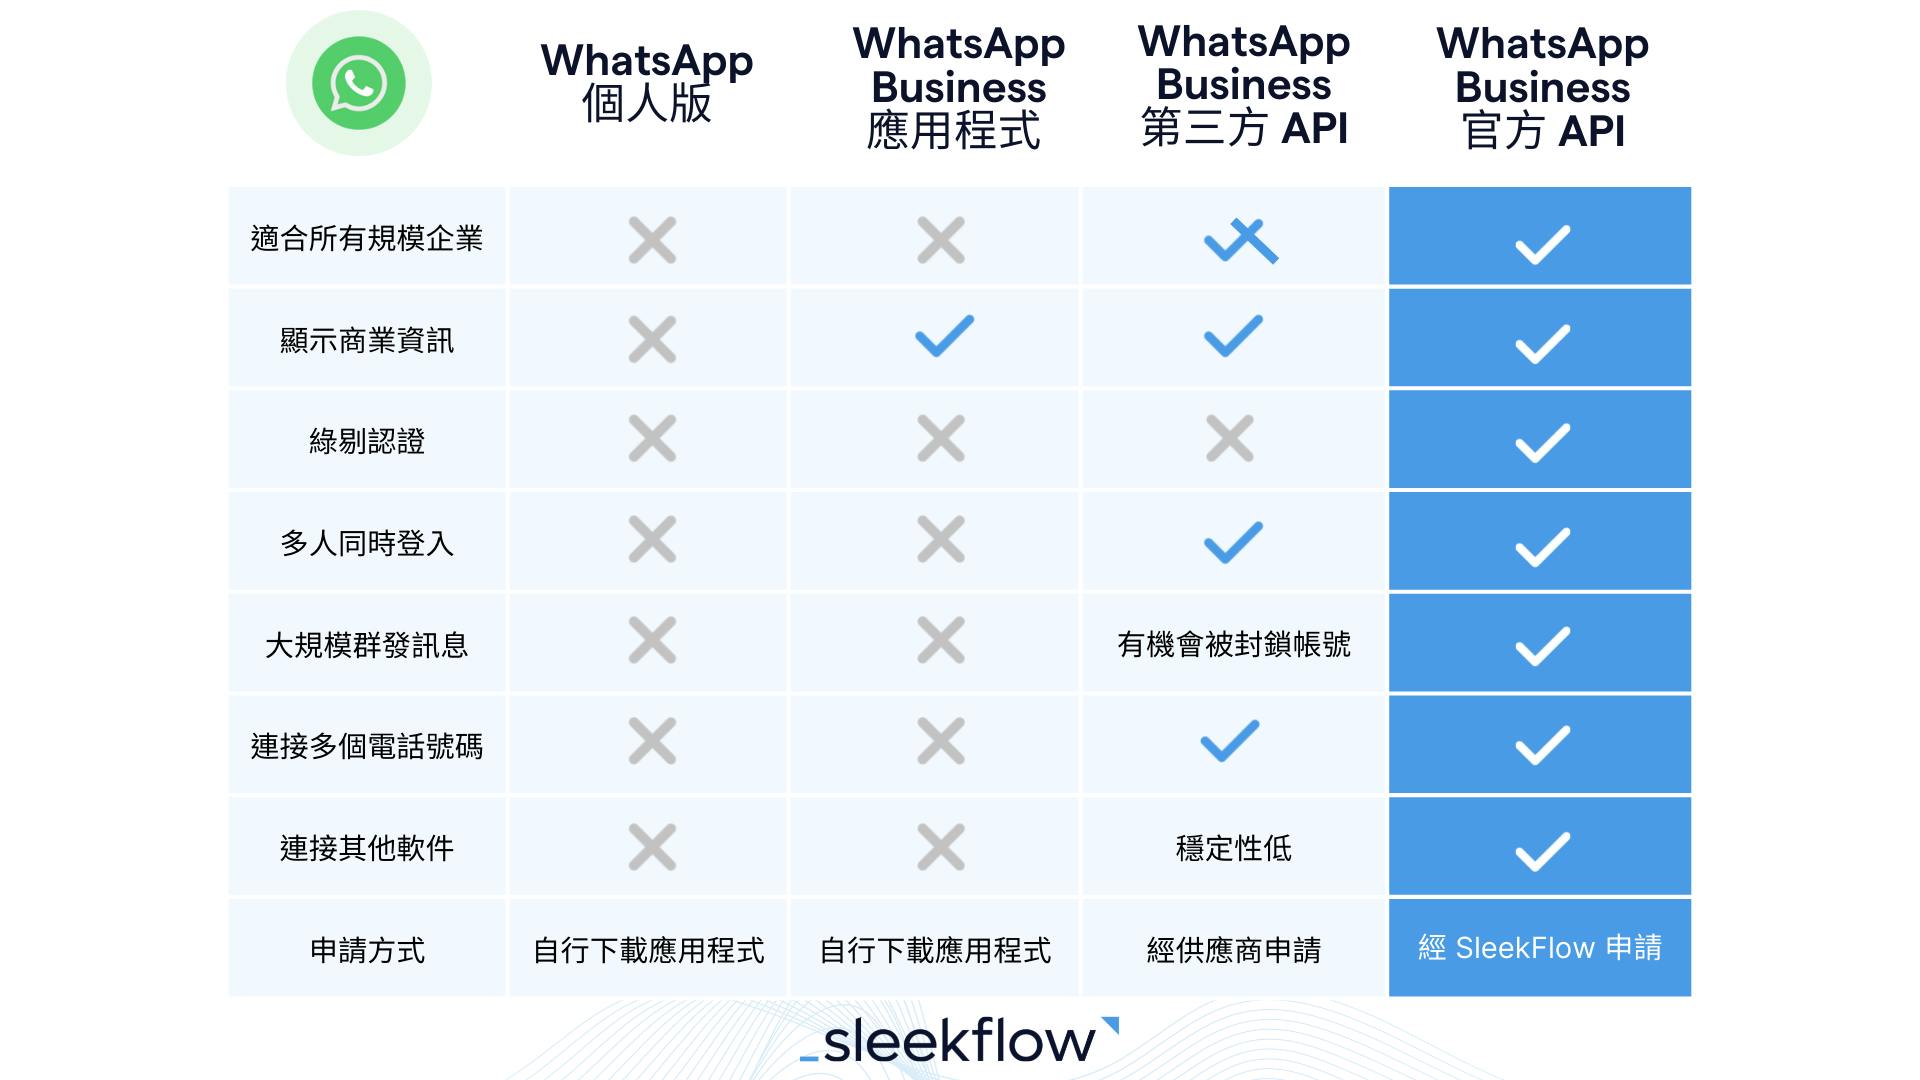 WhatsApp Business API、WhatsApp Business 應用程序與個人版的差別